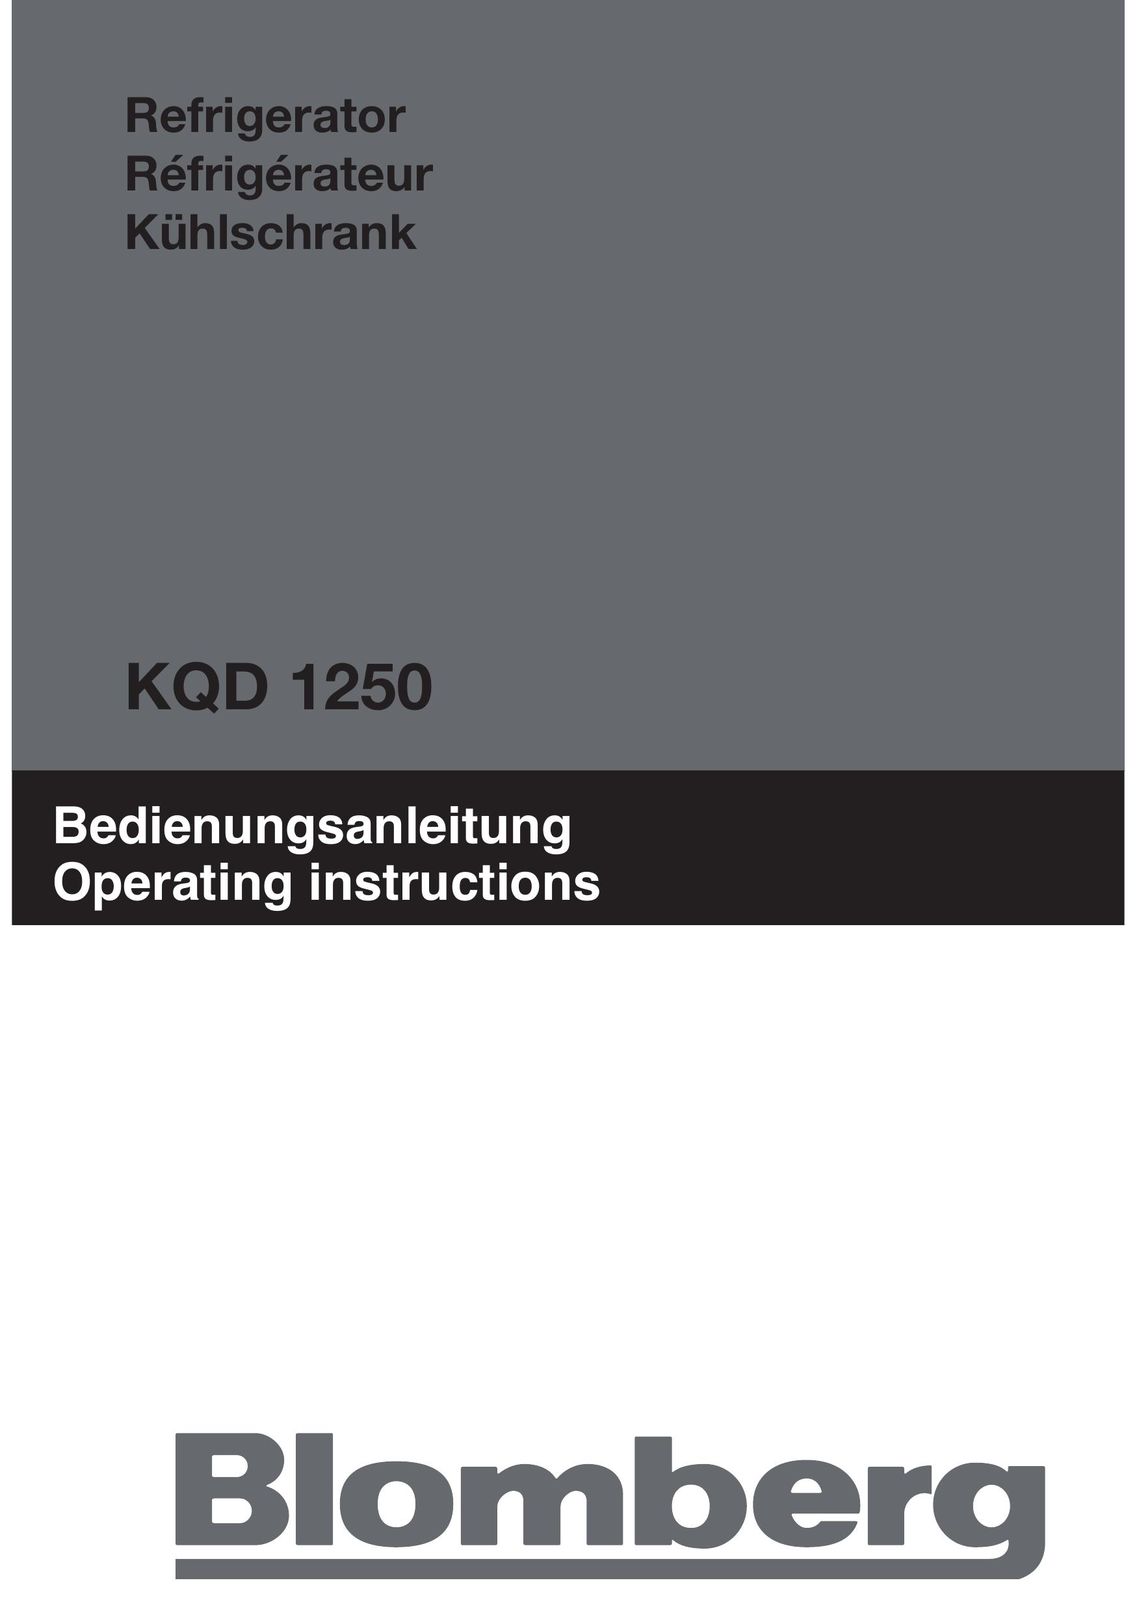 Blomberg KQD 1250 Freezer User Manual